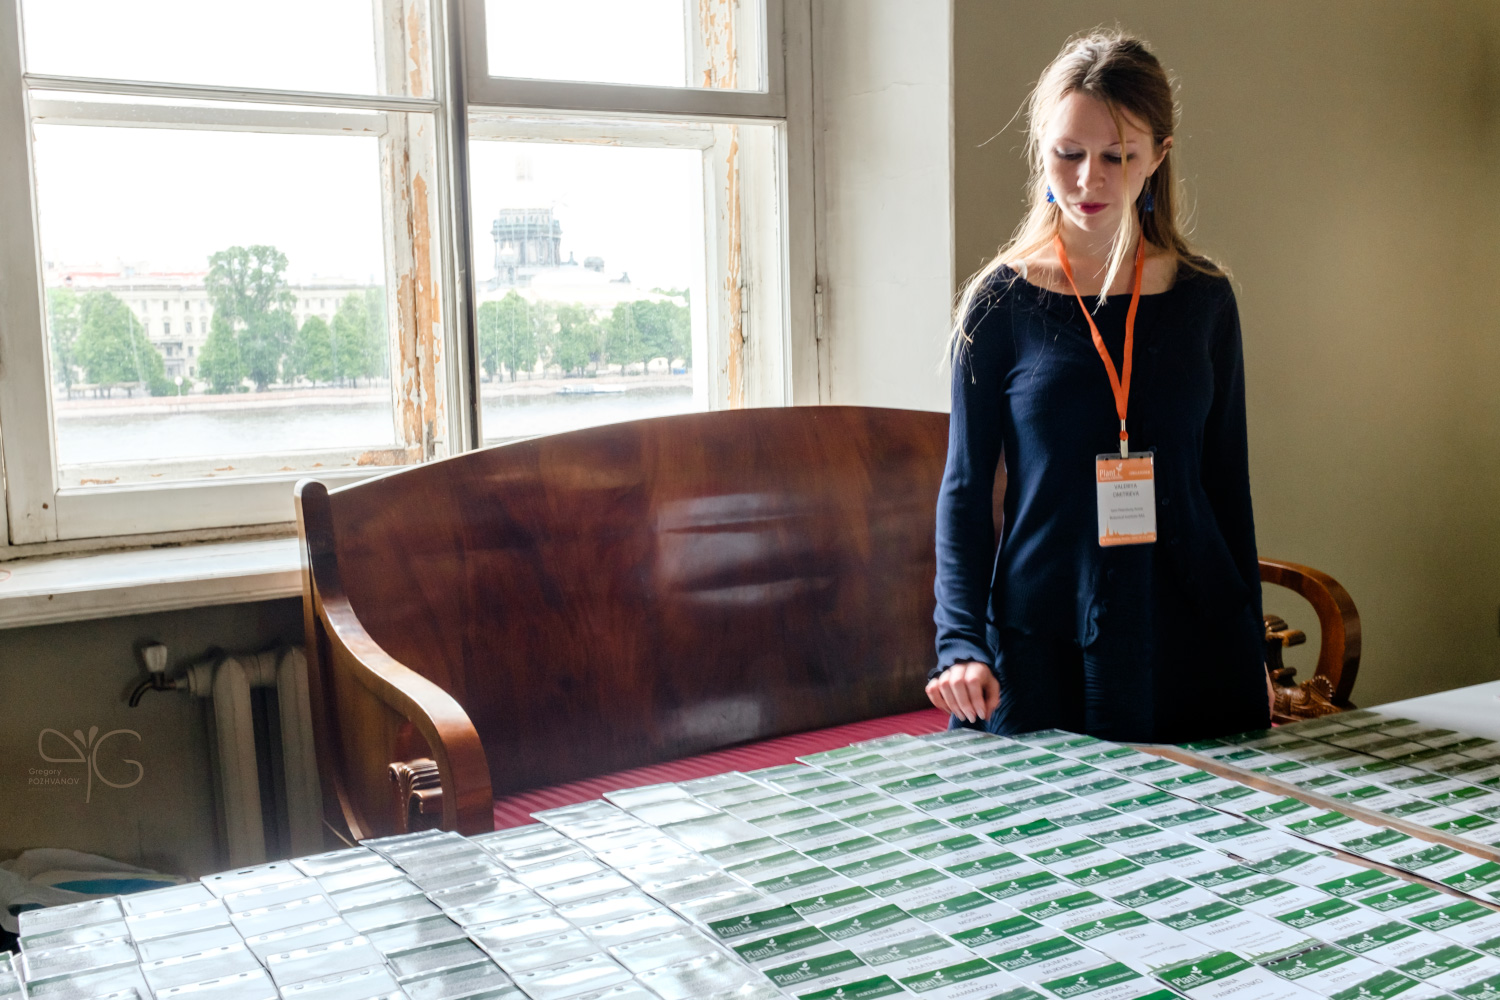 Valeria Dmitrieva stands behind a registration desk filled with participant badges